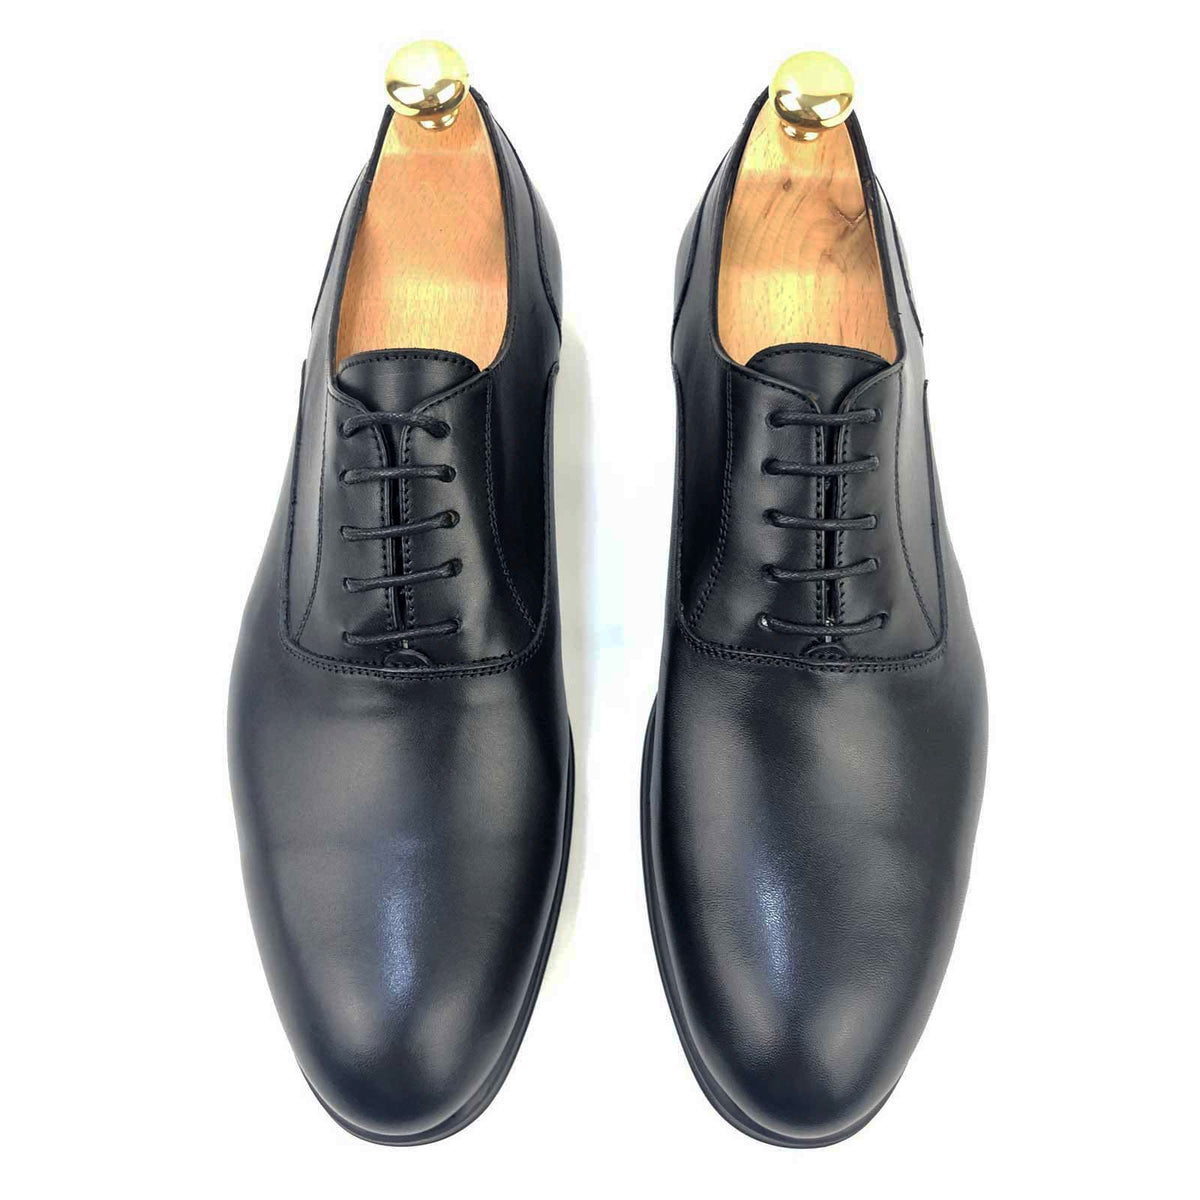 CH1336-015 - Chaussure cuir NOIR - deluxe-maroc